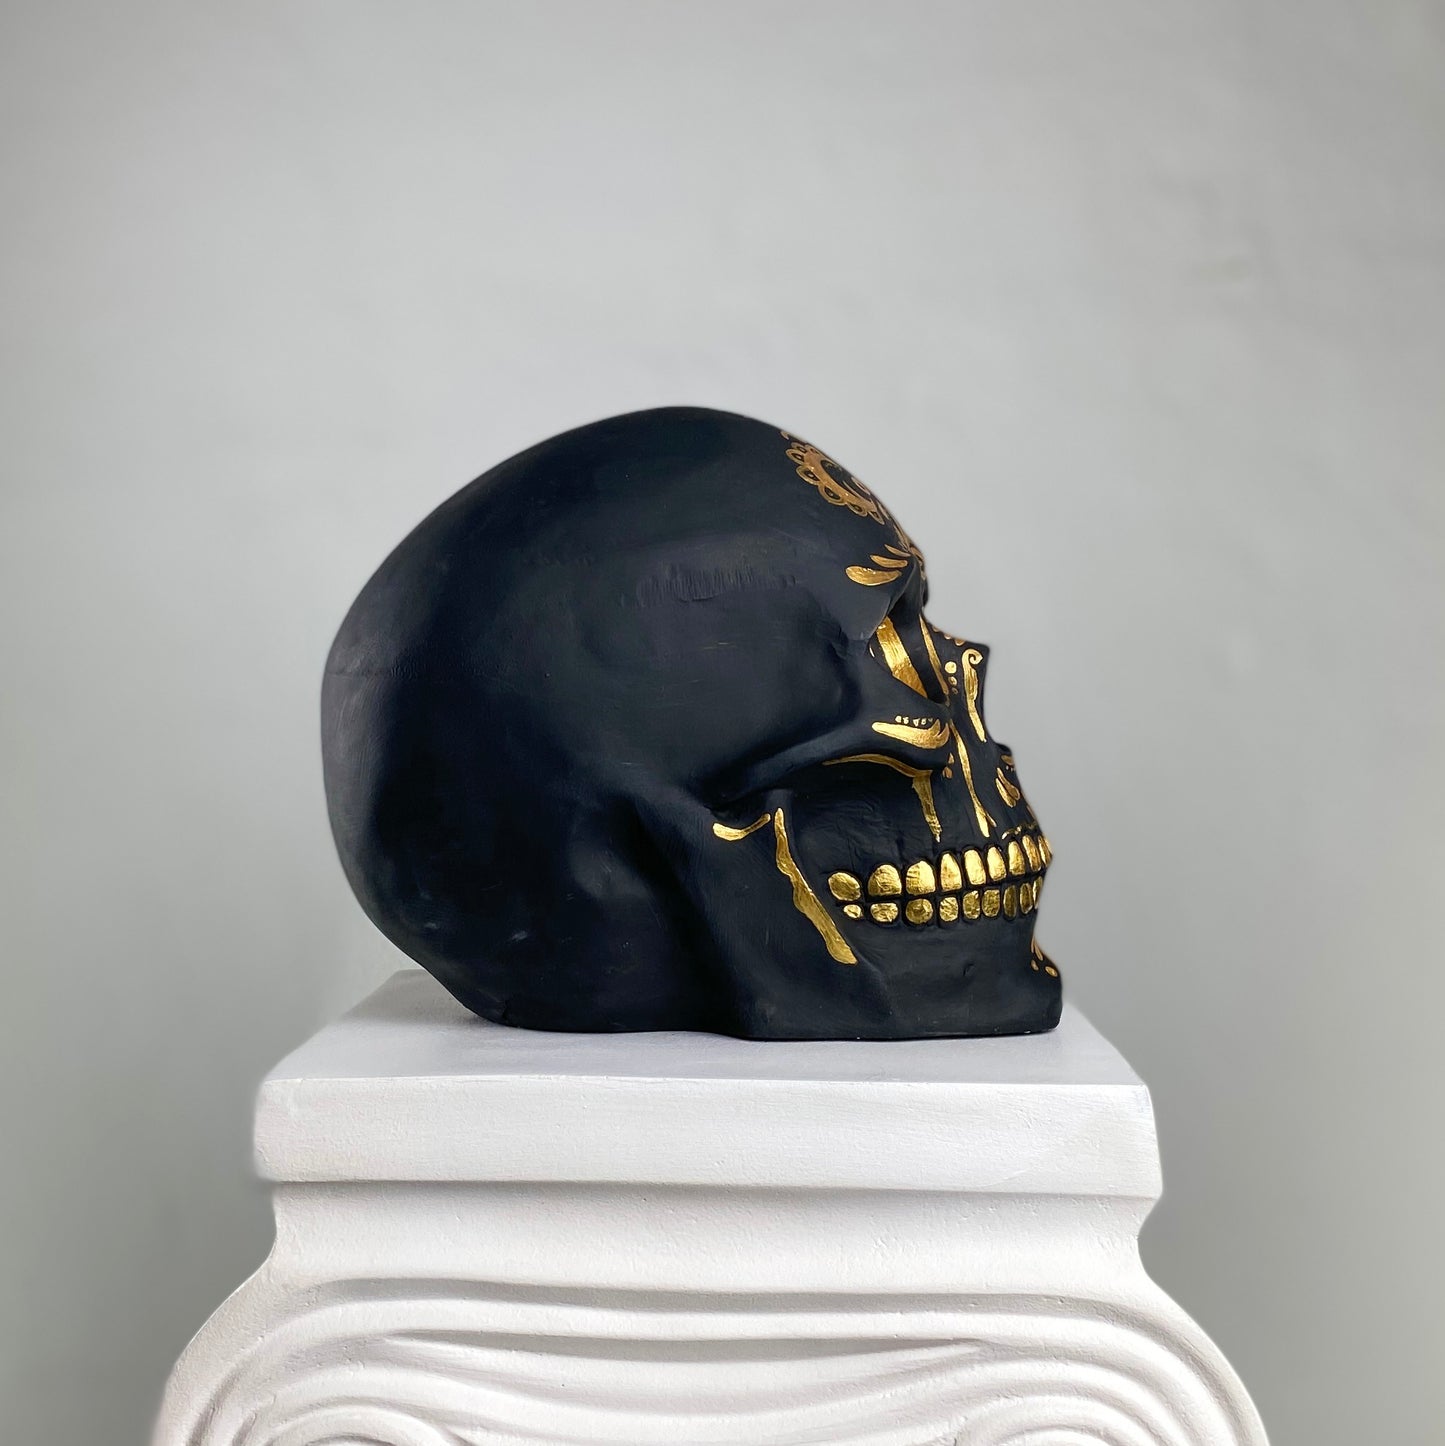 Skull 'El Muerto' Pop Art Sculpture, Modern Home Decor